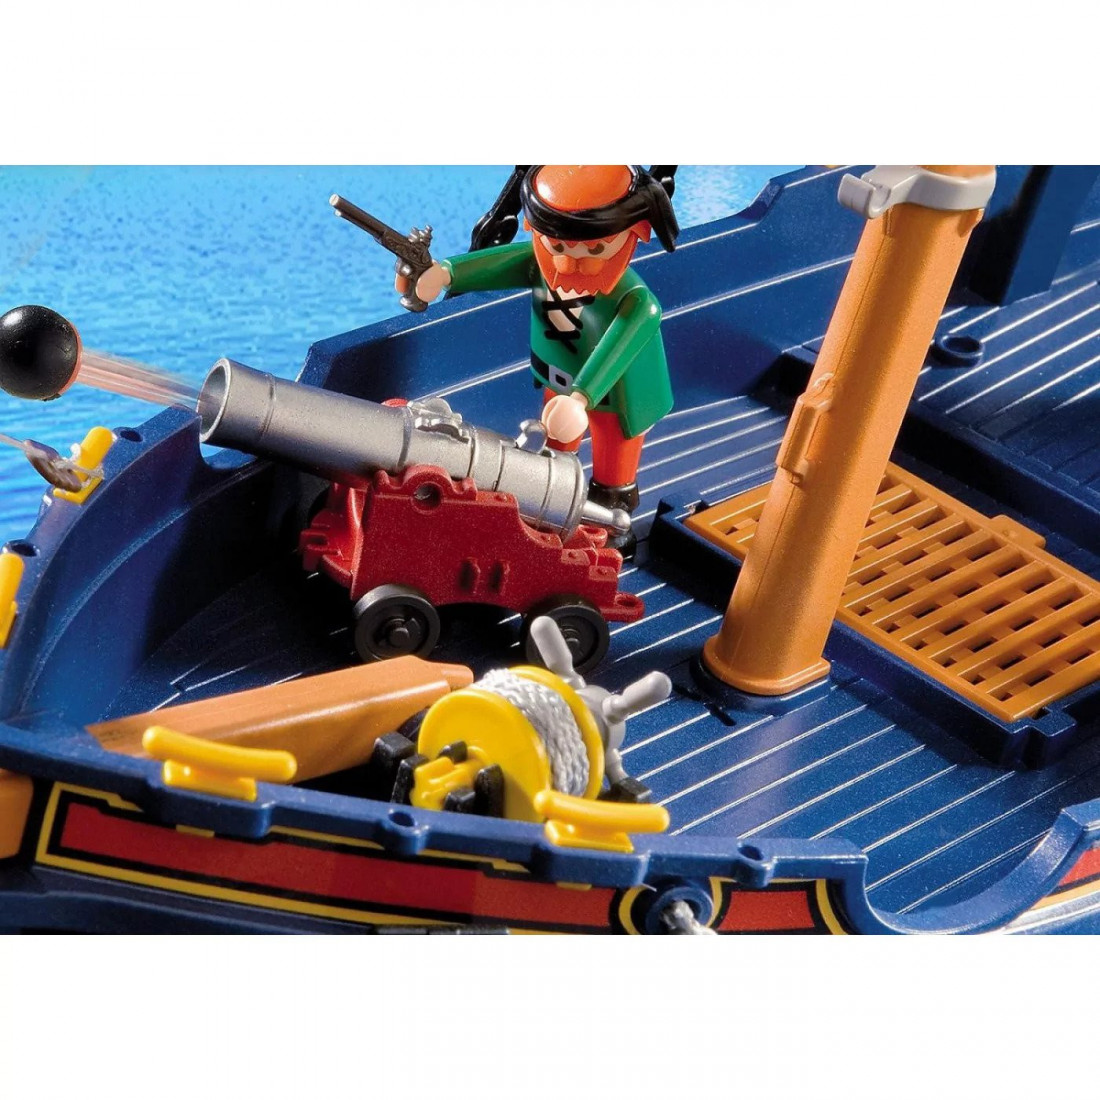 Pirates Κουρσάρικη Σκούνα 5810 Playmobil